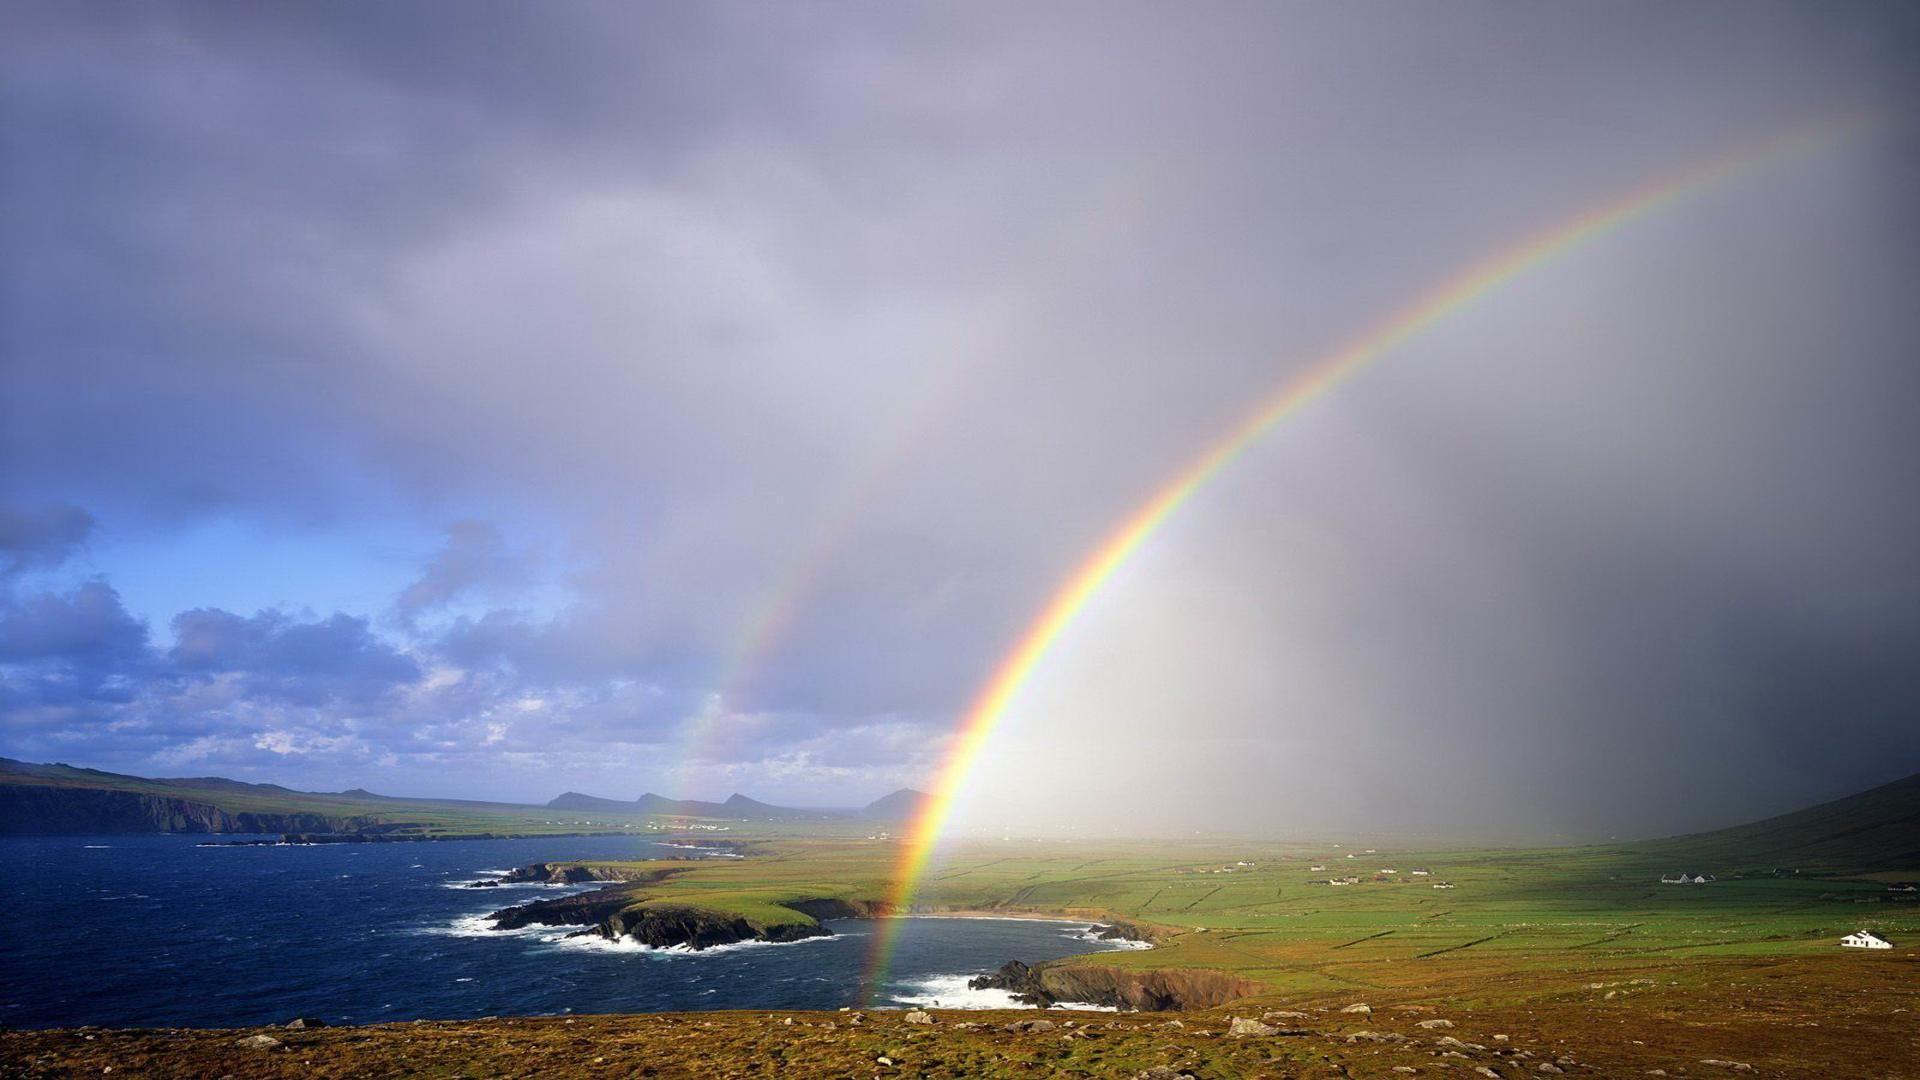 Rainbow over bally ferriter bay county kerry Ireland scenic free